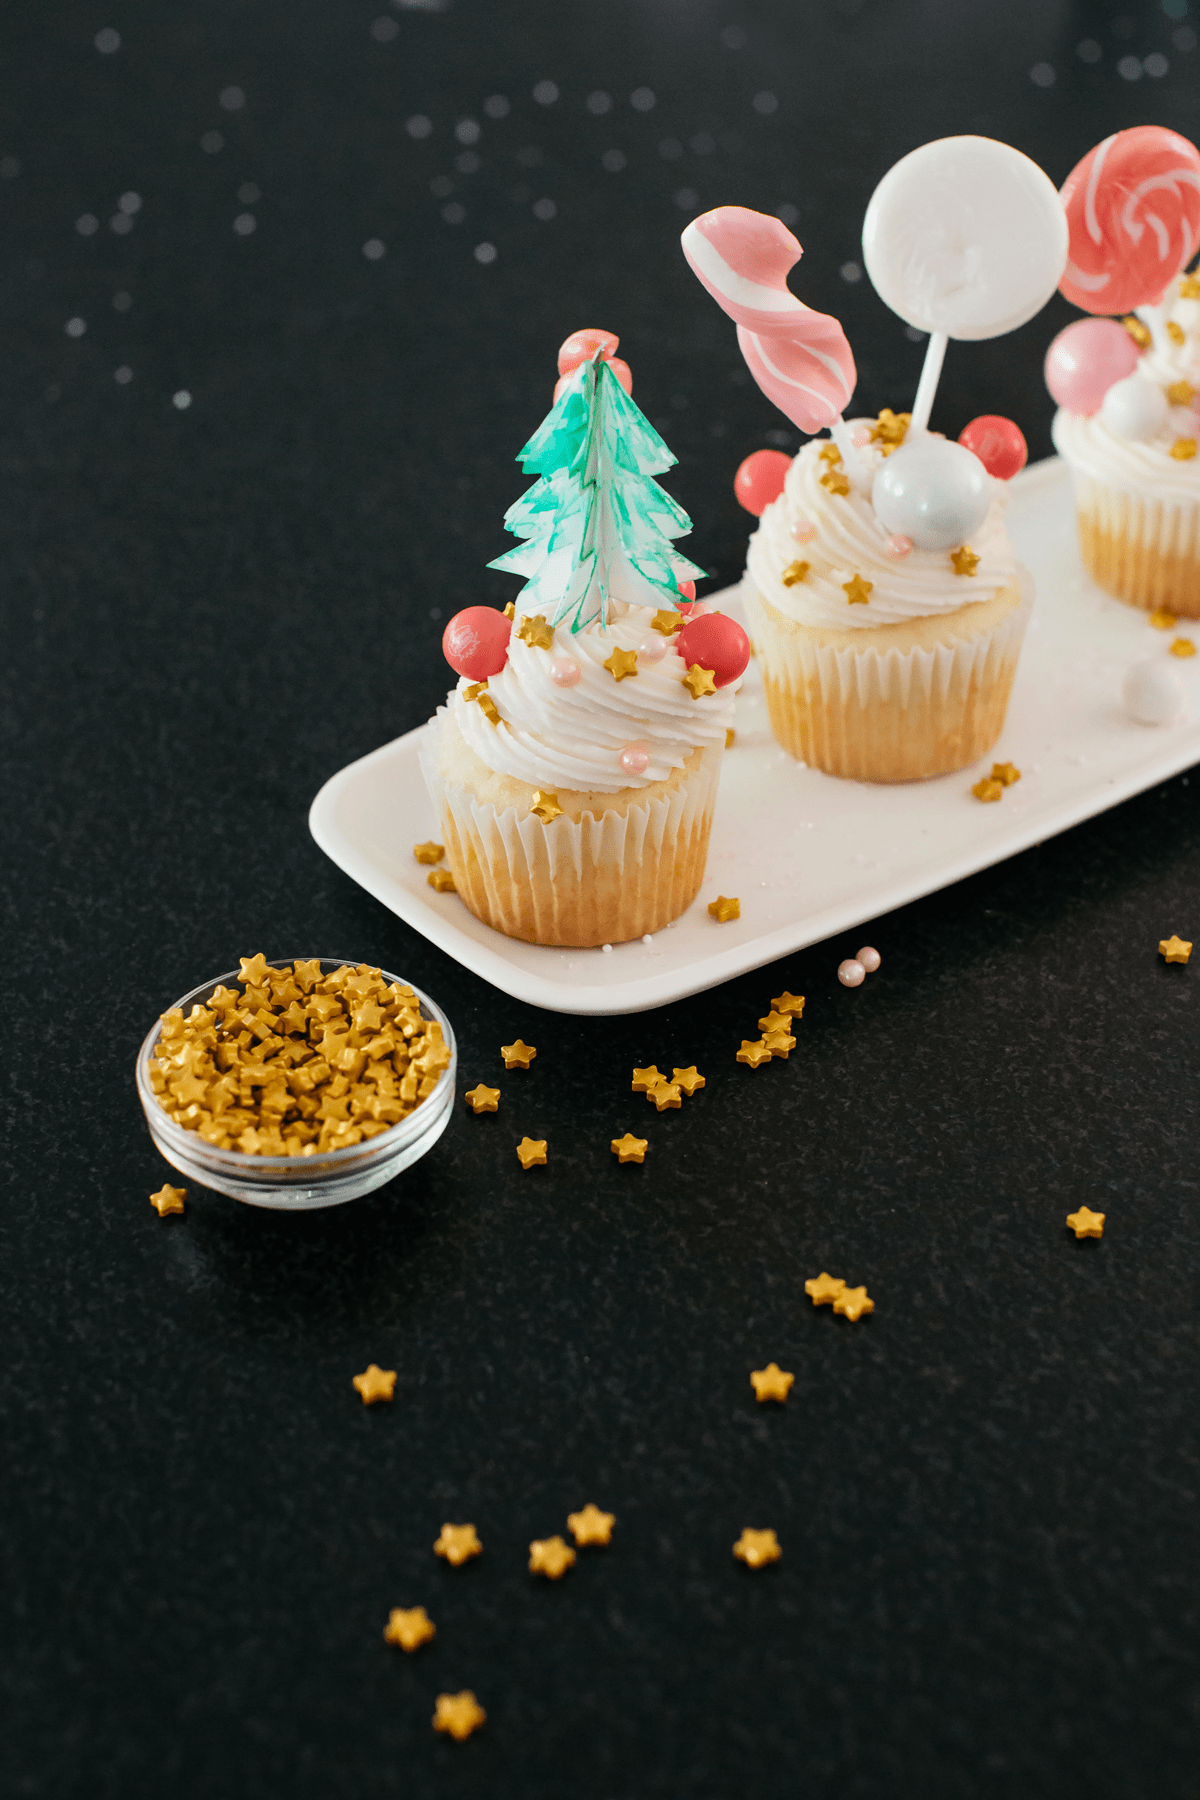 Christmas cupcakes by Jenny Keller and Tiffani Thiessen